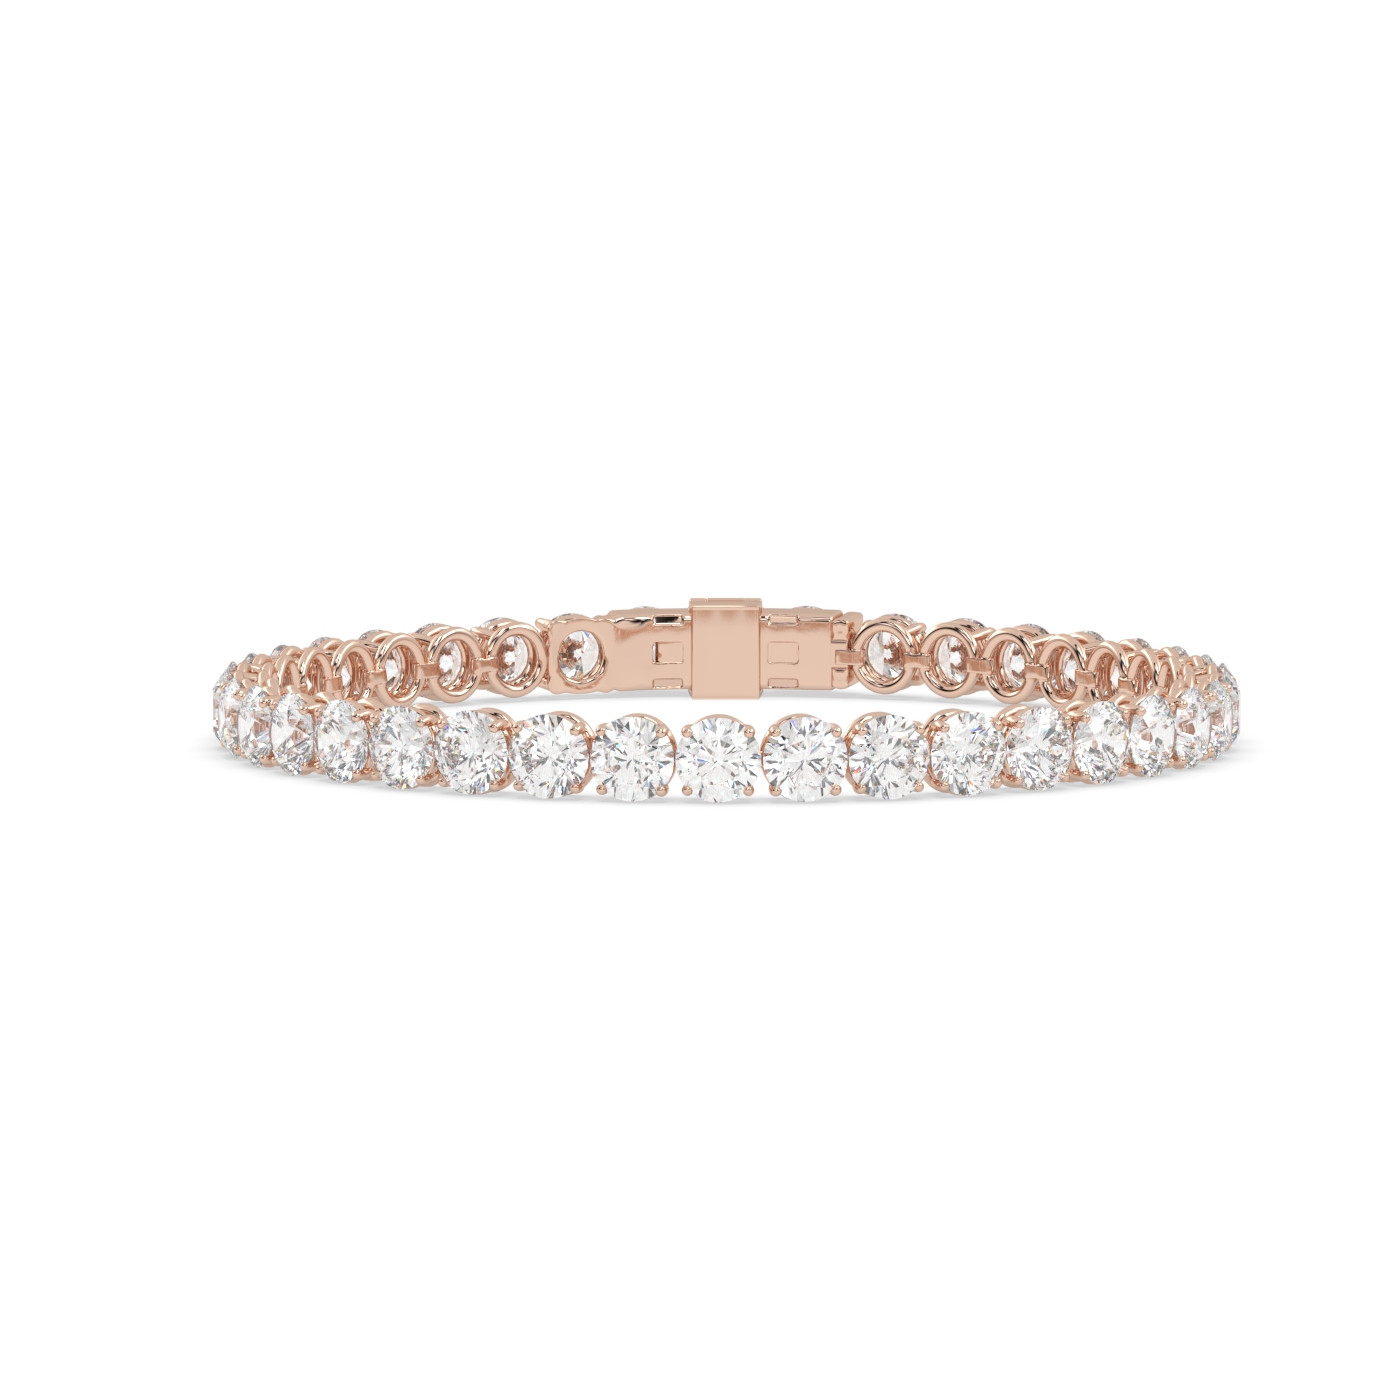 18k rose gold 14 carat round diamond tennis bracelet with modern american lock system